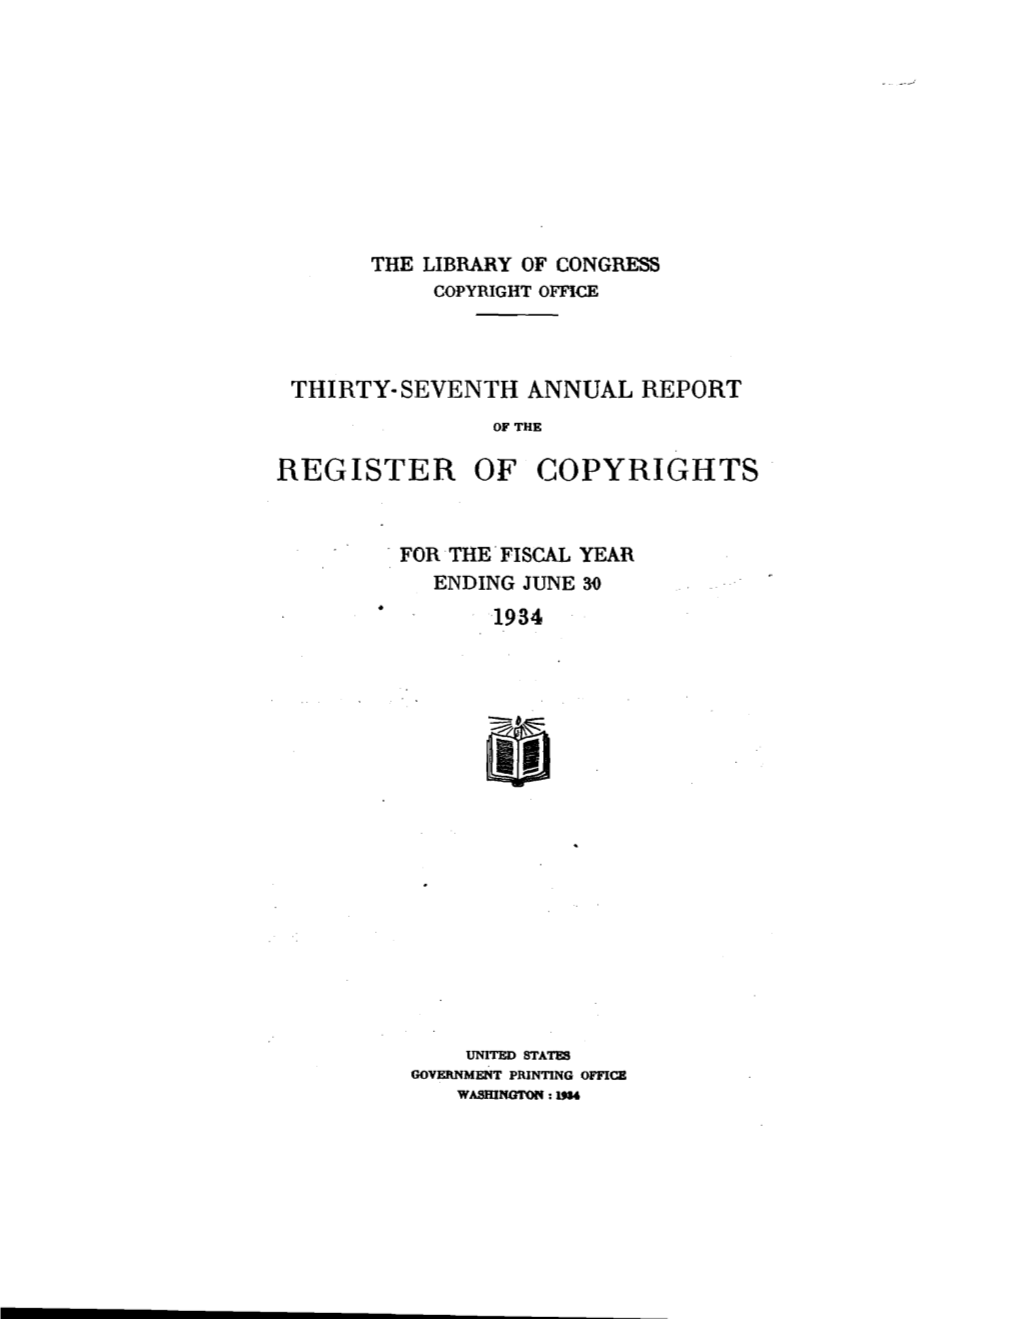 1934 Annual Report